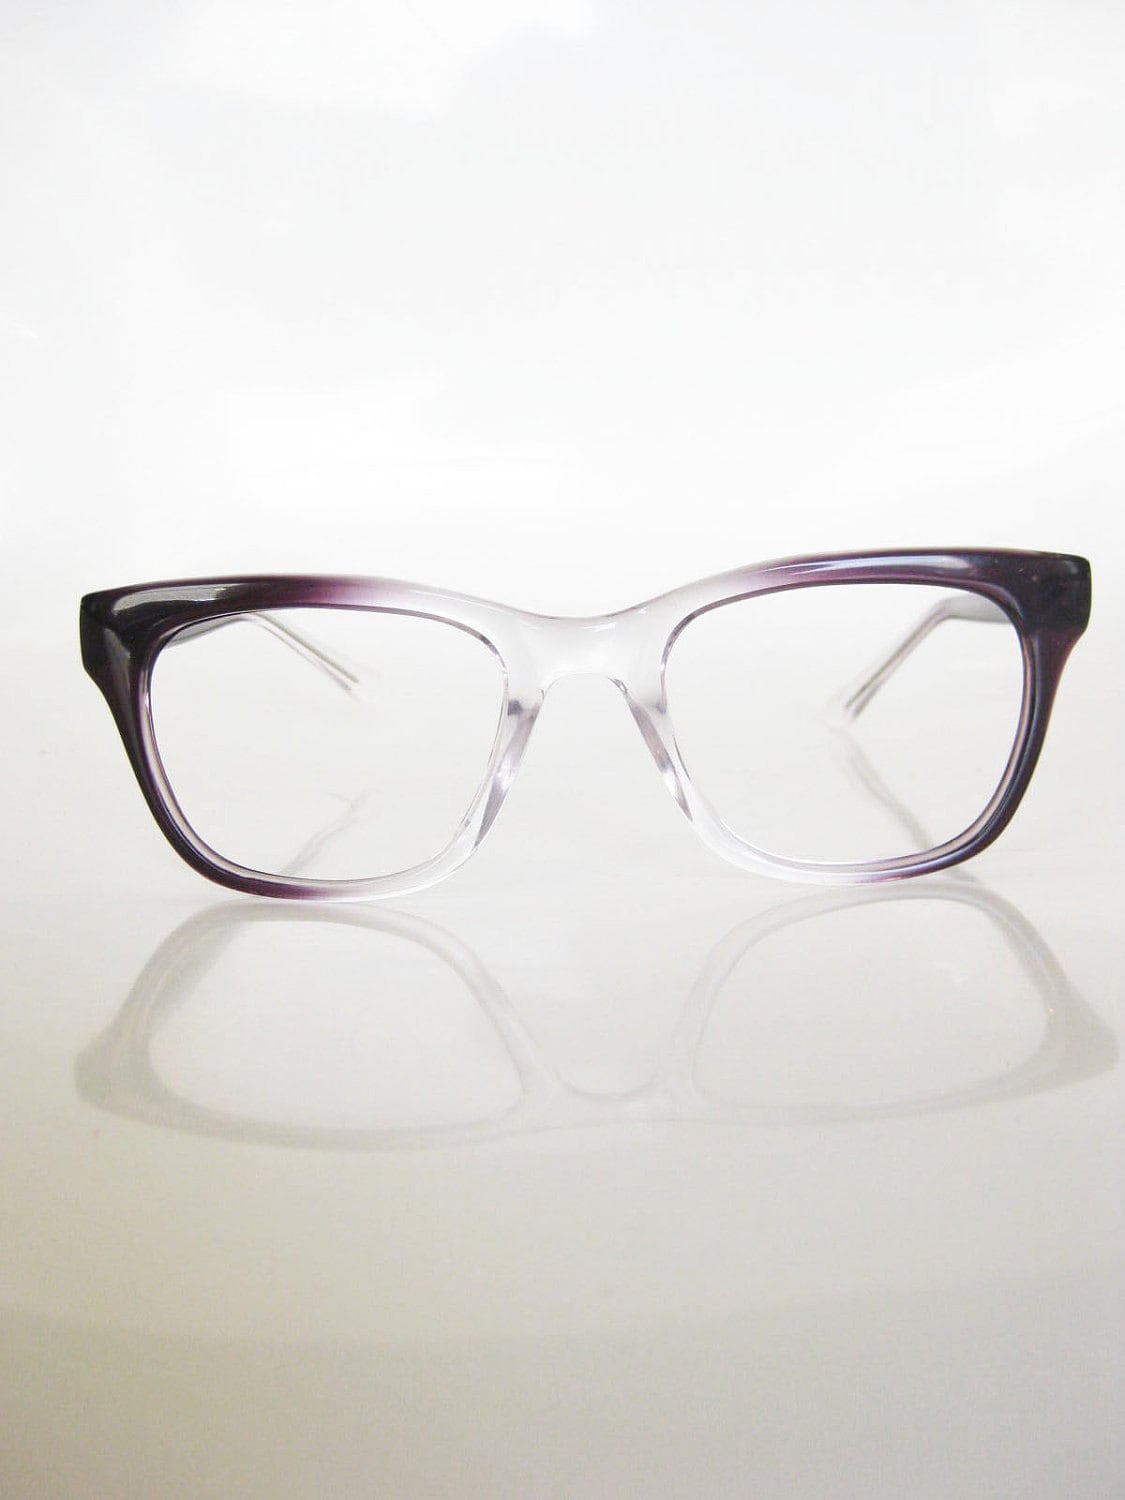 Vintage Mad Men Plum Fade Glasses Eyeglasses By Oliverandalexa